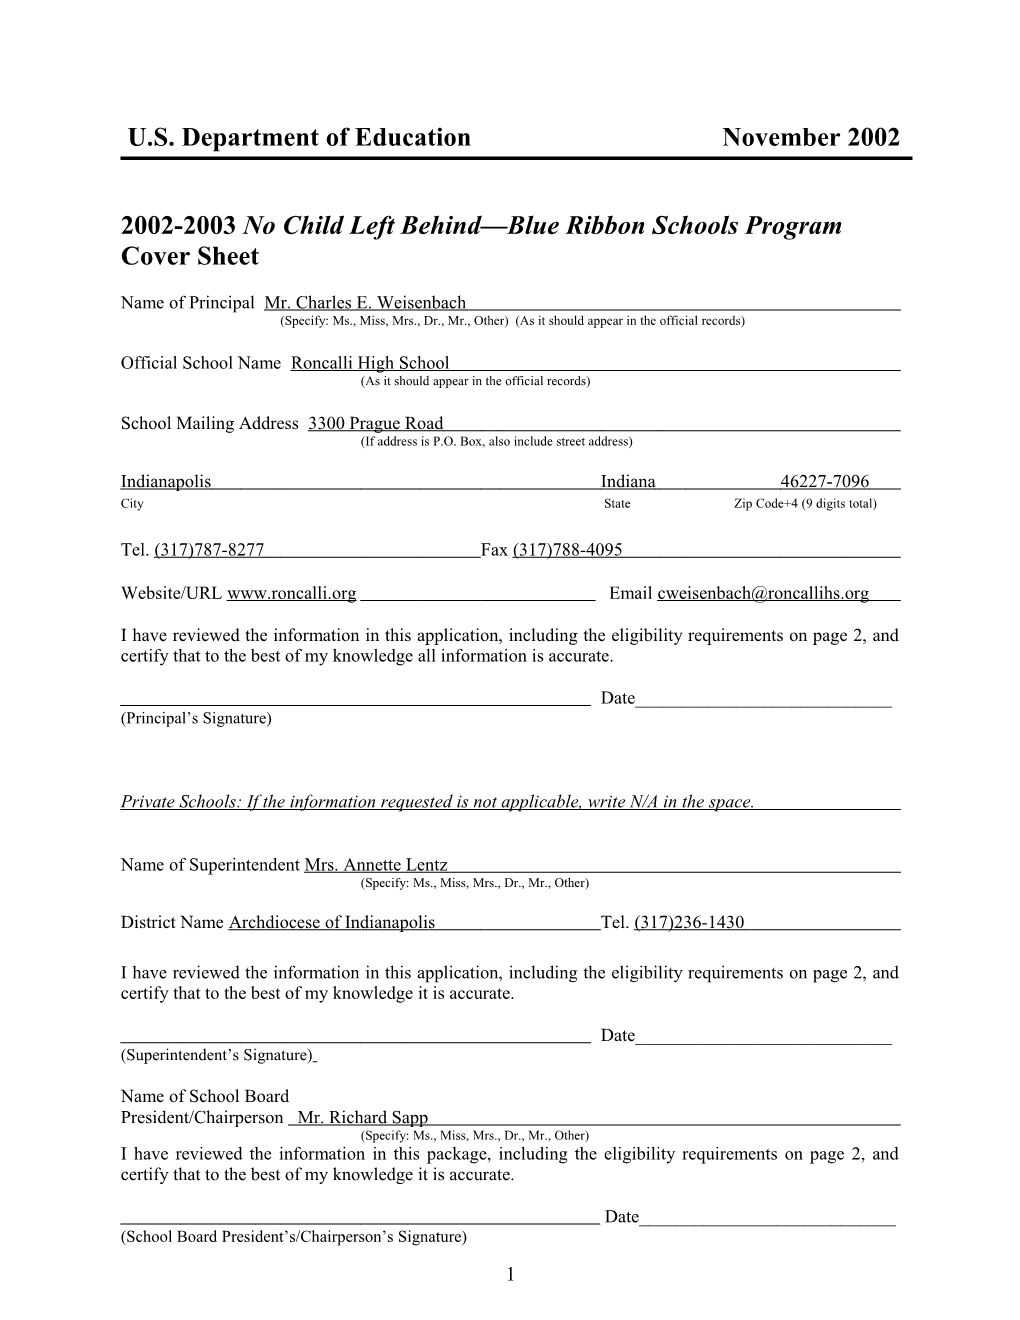 Roncalli High School 2003 No Child Left Behind-Blue Ribbon School (Msword)